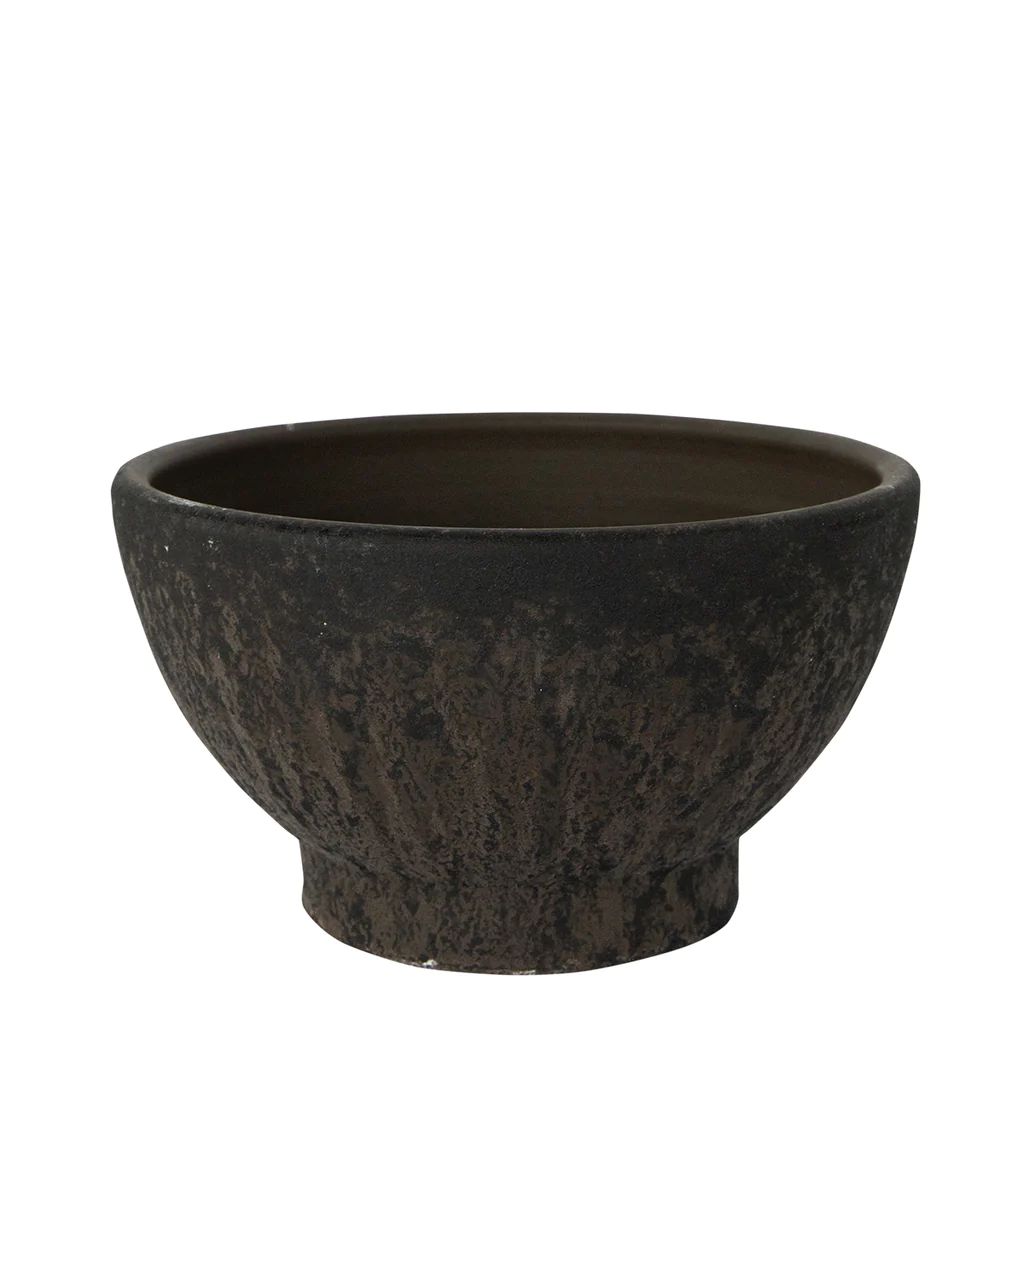 Textured Pedestal Bowl | McGee & Co.